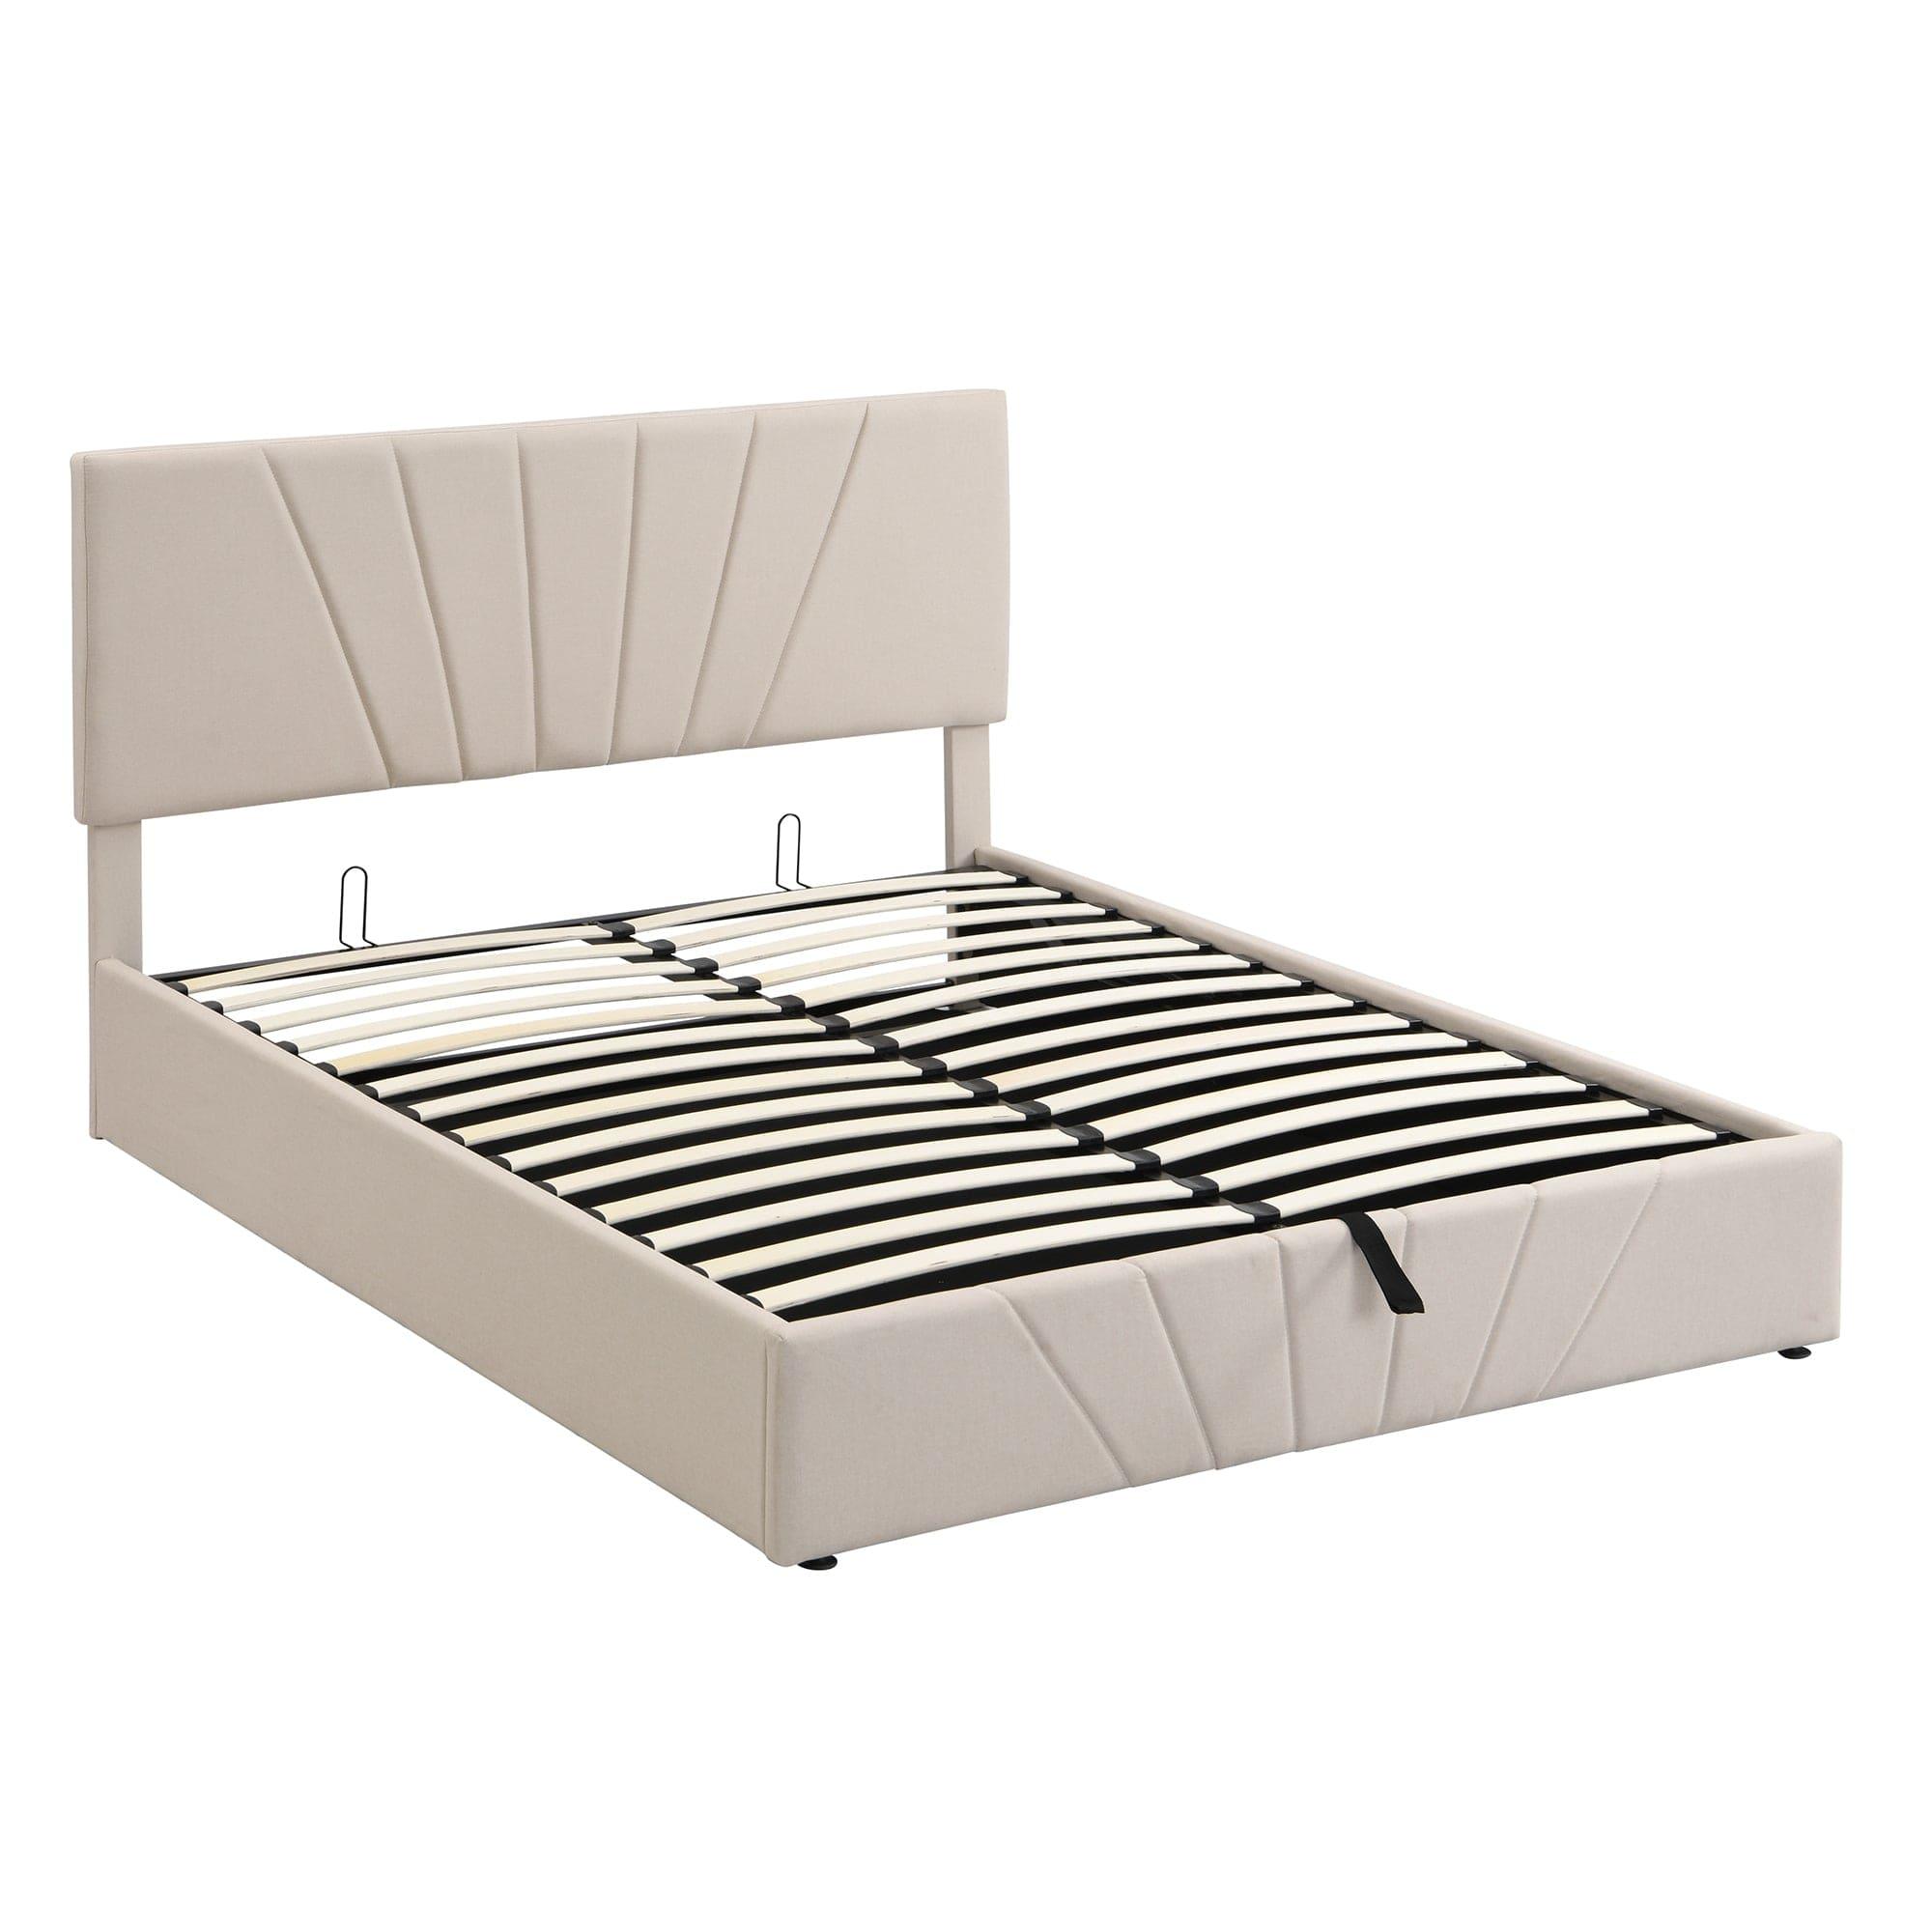 Shop Atacama Upholstered Platform bed with Under Storage - Queen Mademoiselle Home Decor